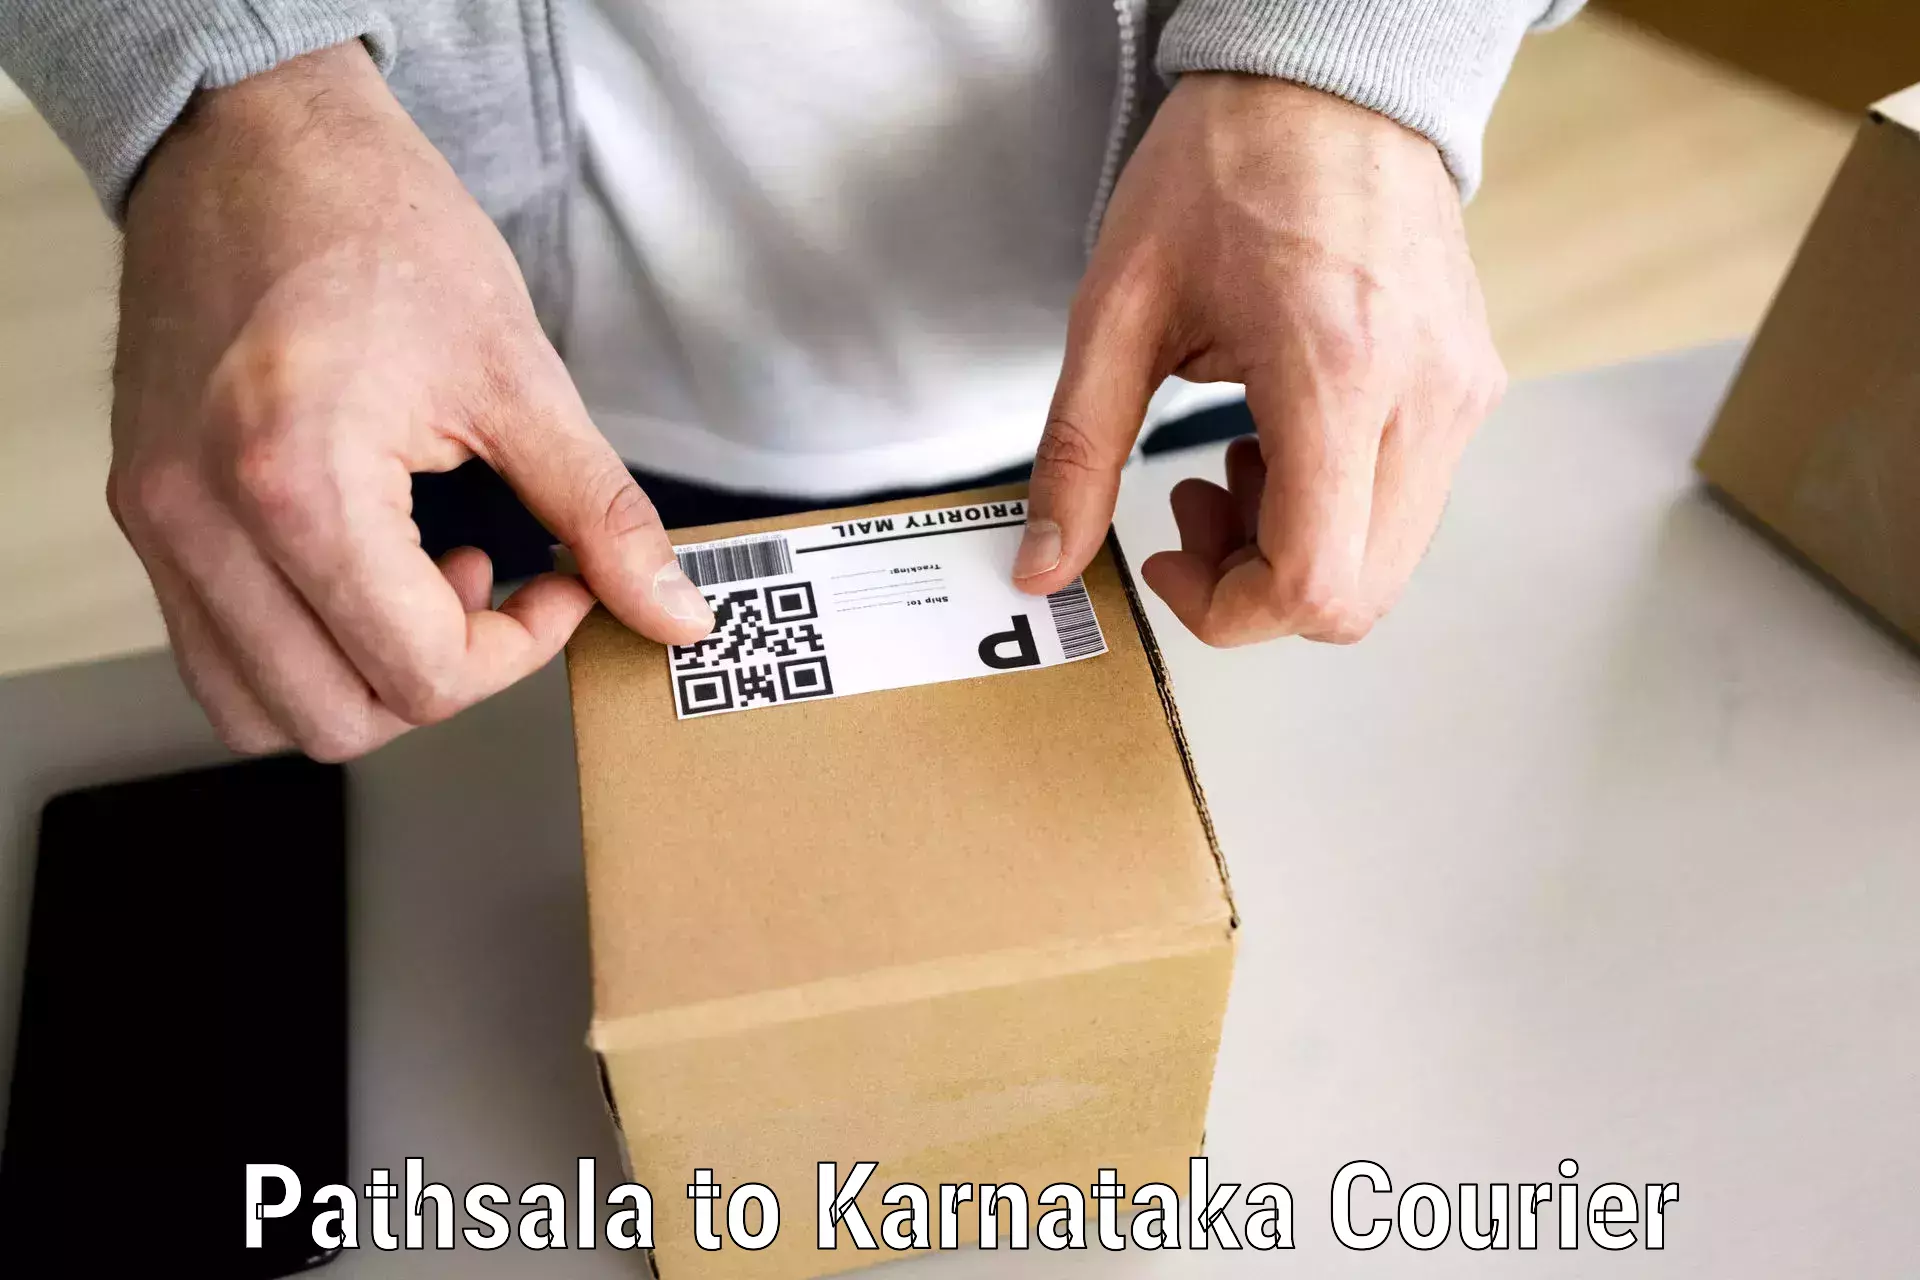 Trusted relocation experts Pathsala to Karnataka